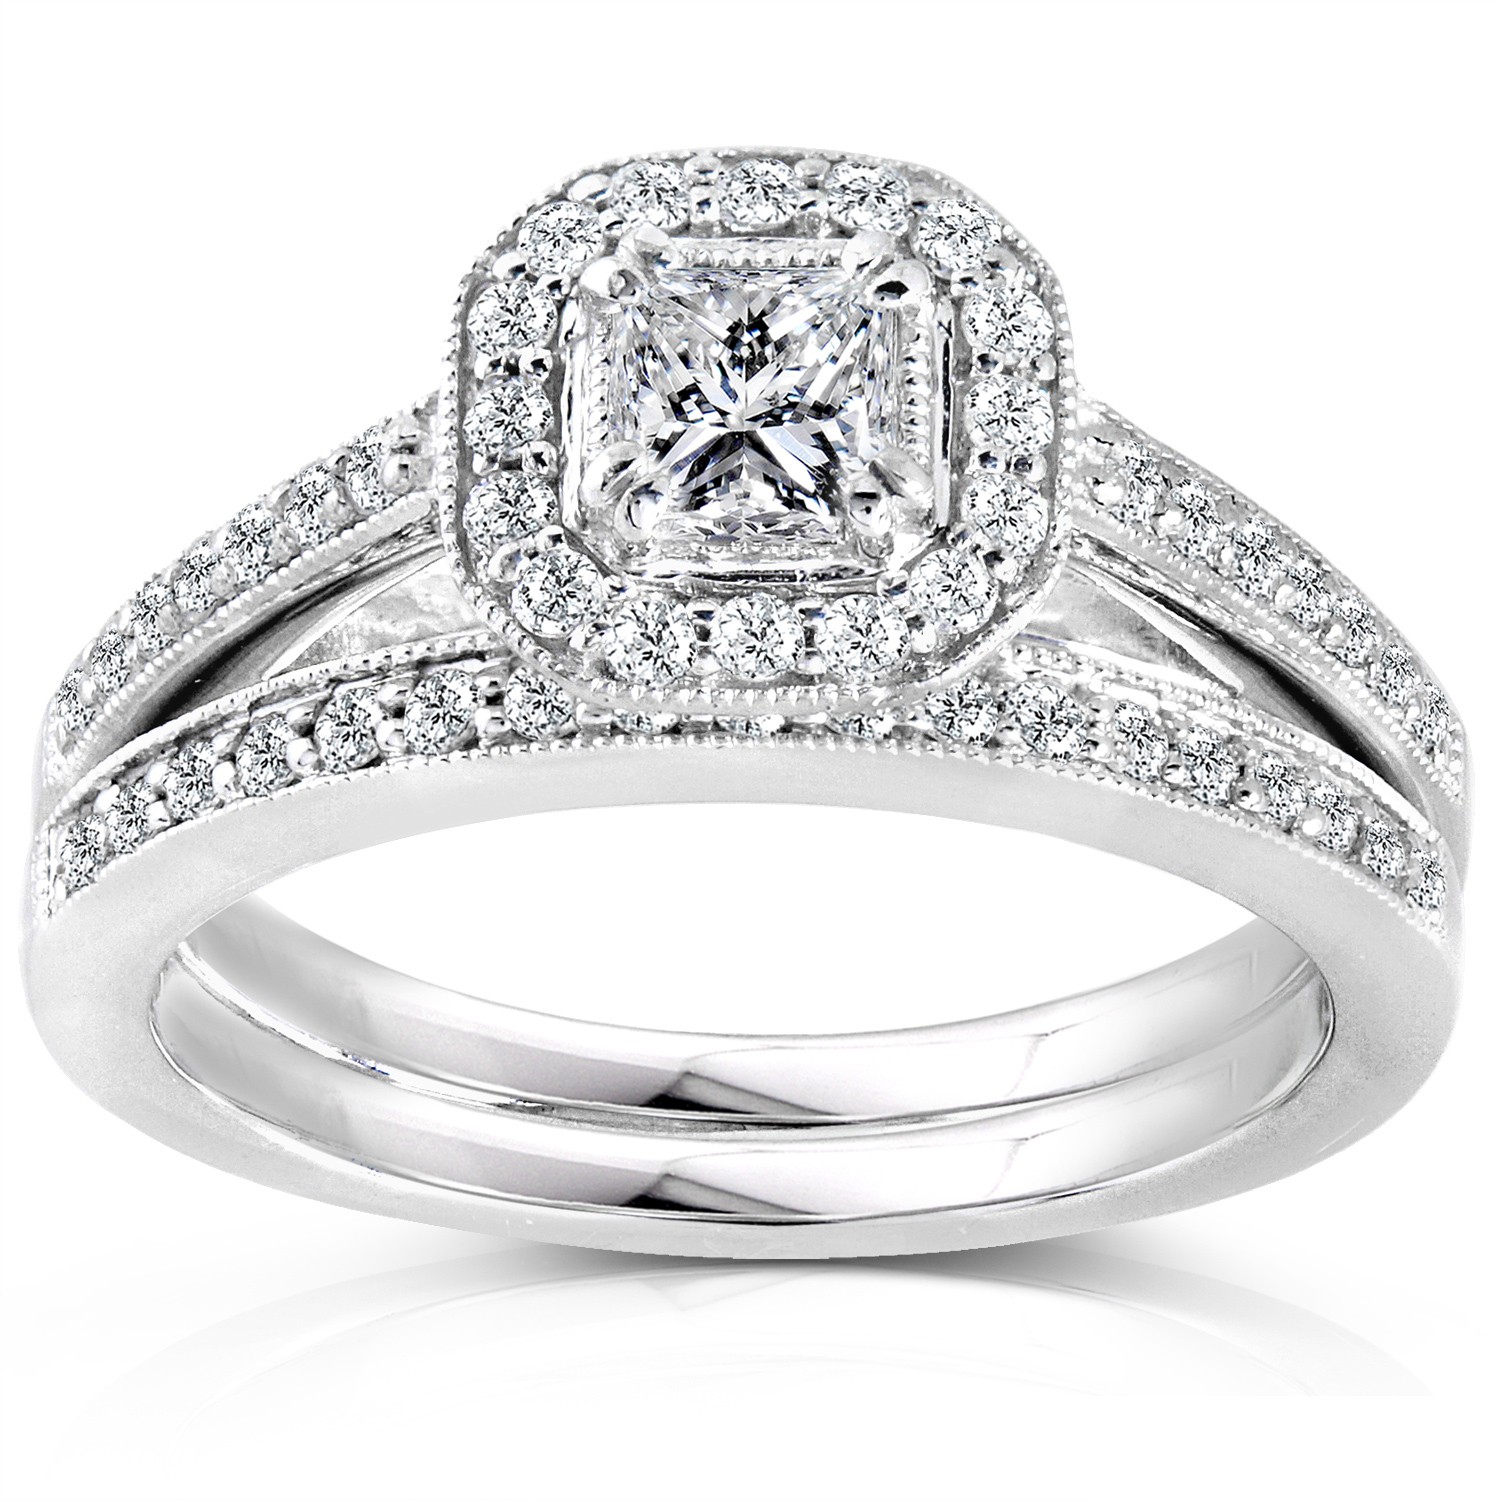 ... Halo Sale! Handcrafted Wedding Set Ring 1 Carat Princess Cut Diamond